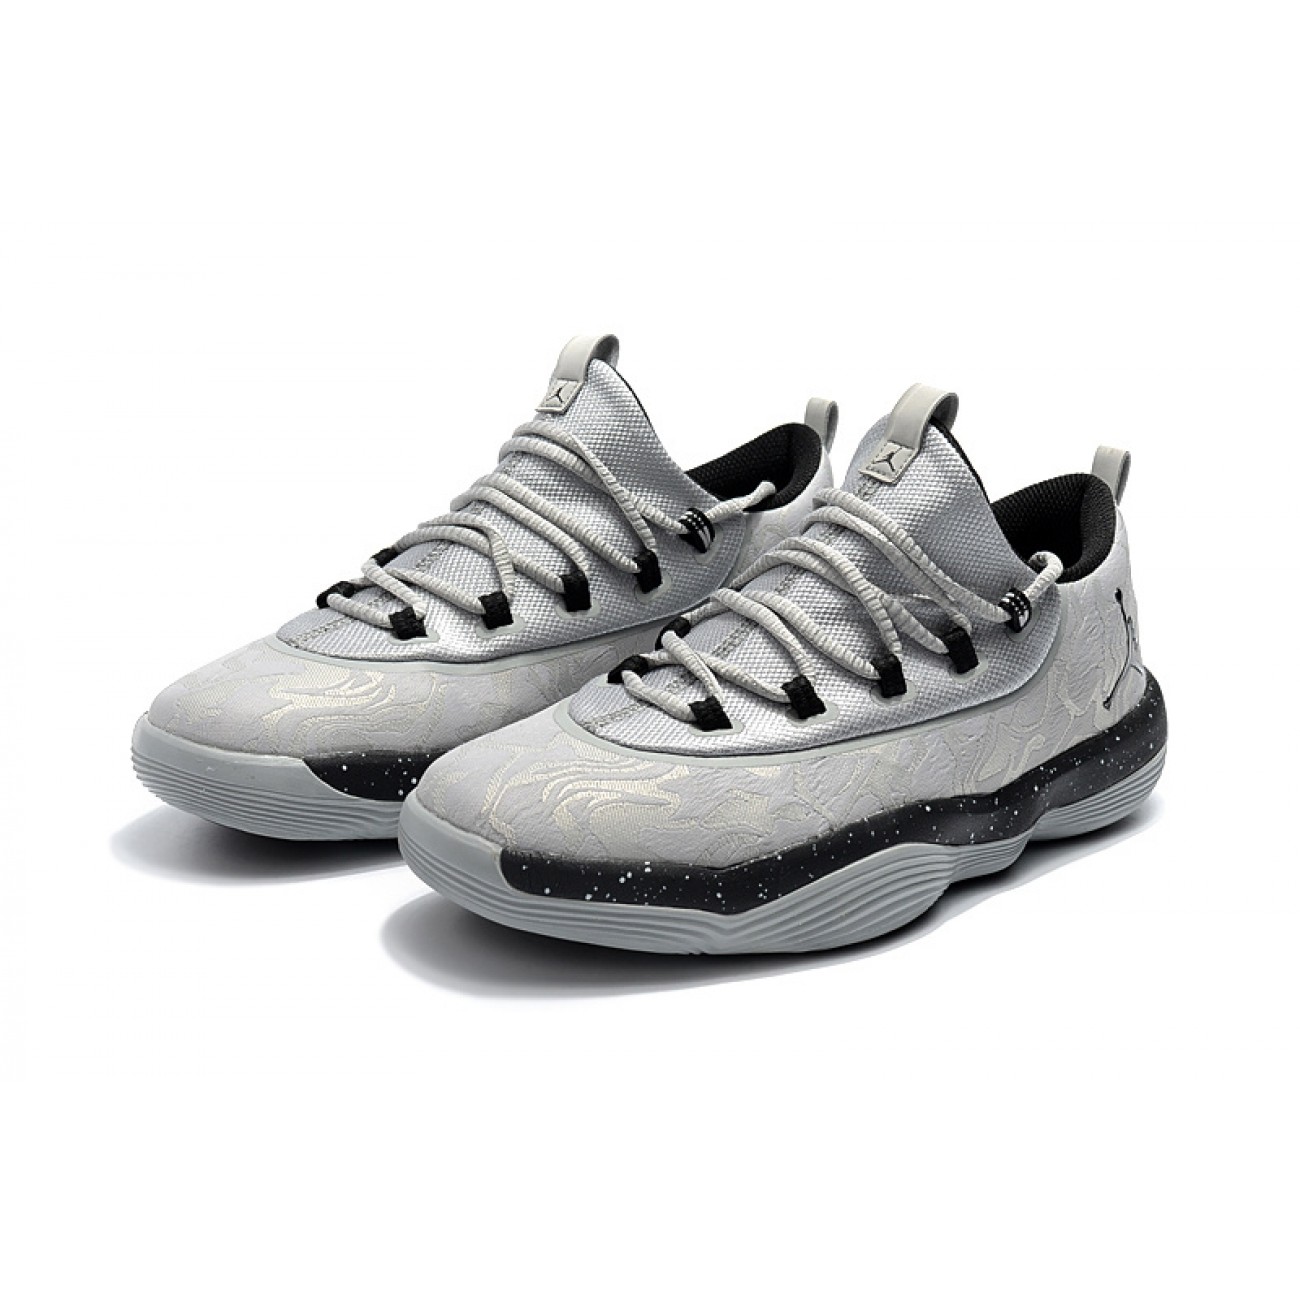 Air Jordan Super Fly Low Basketball Shoes Grey